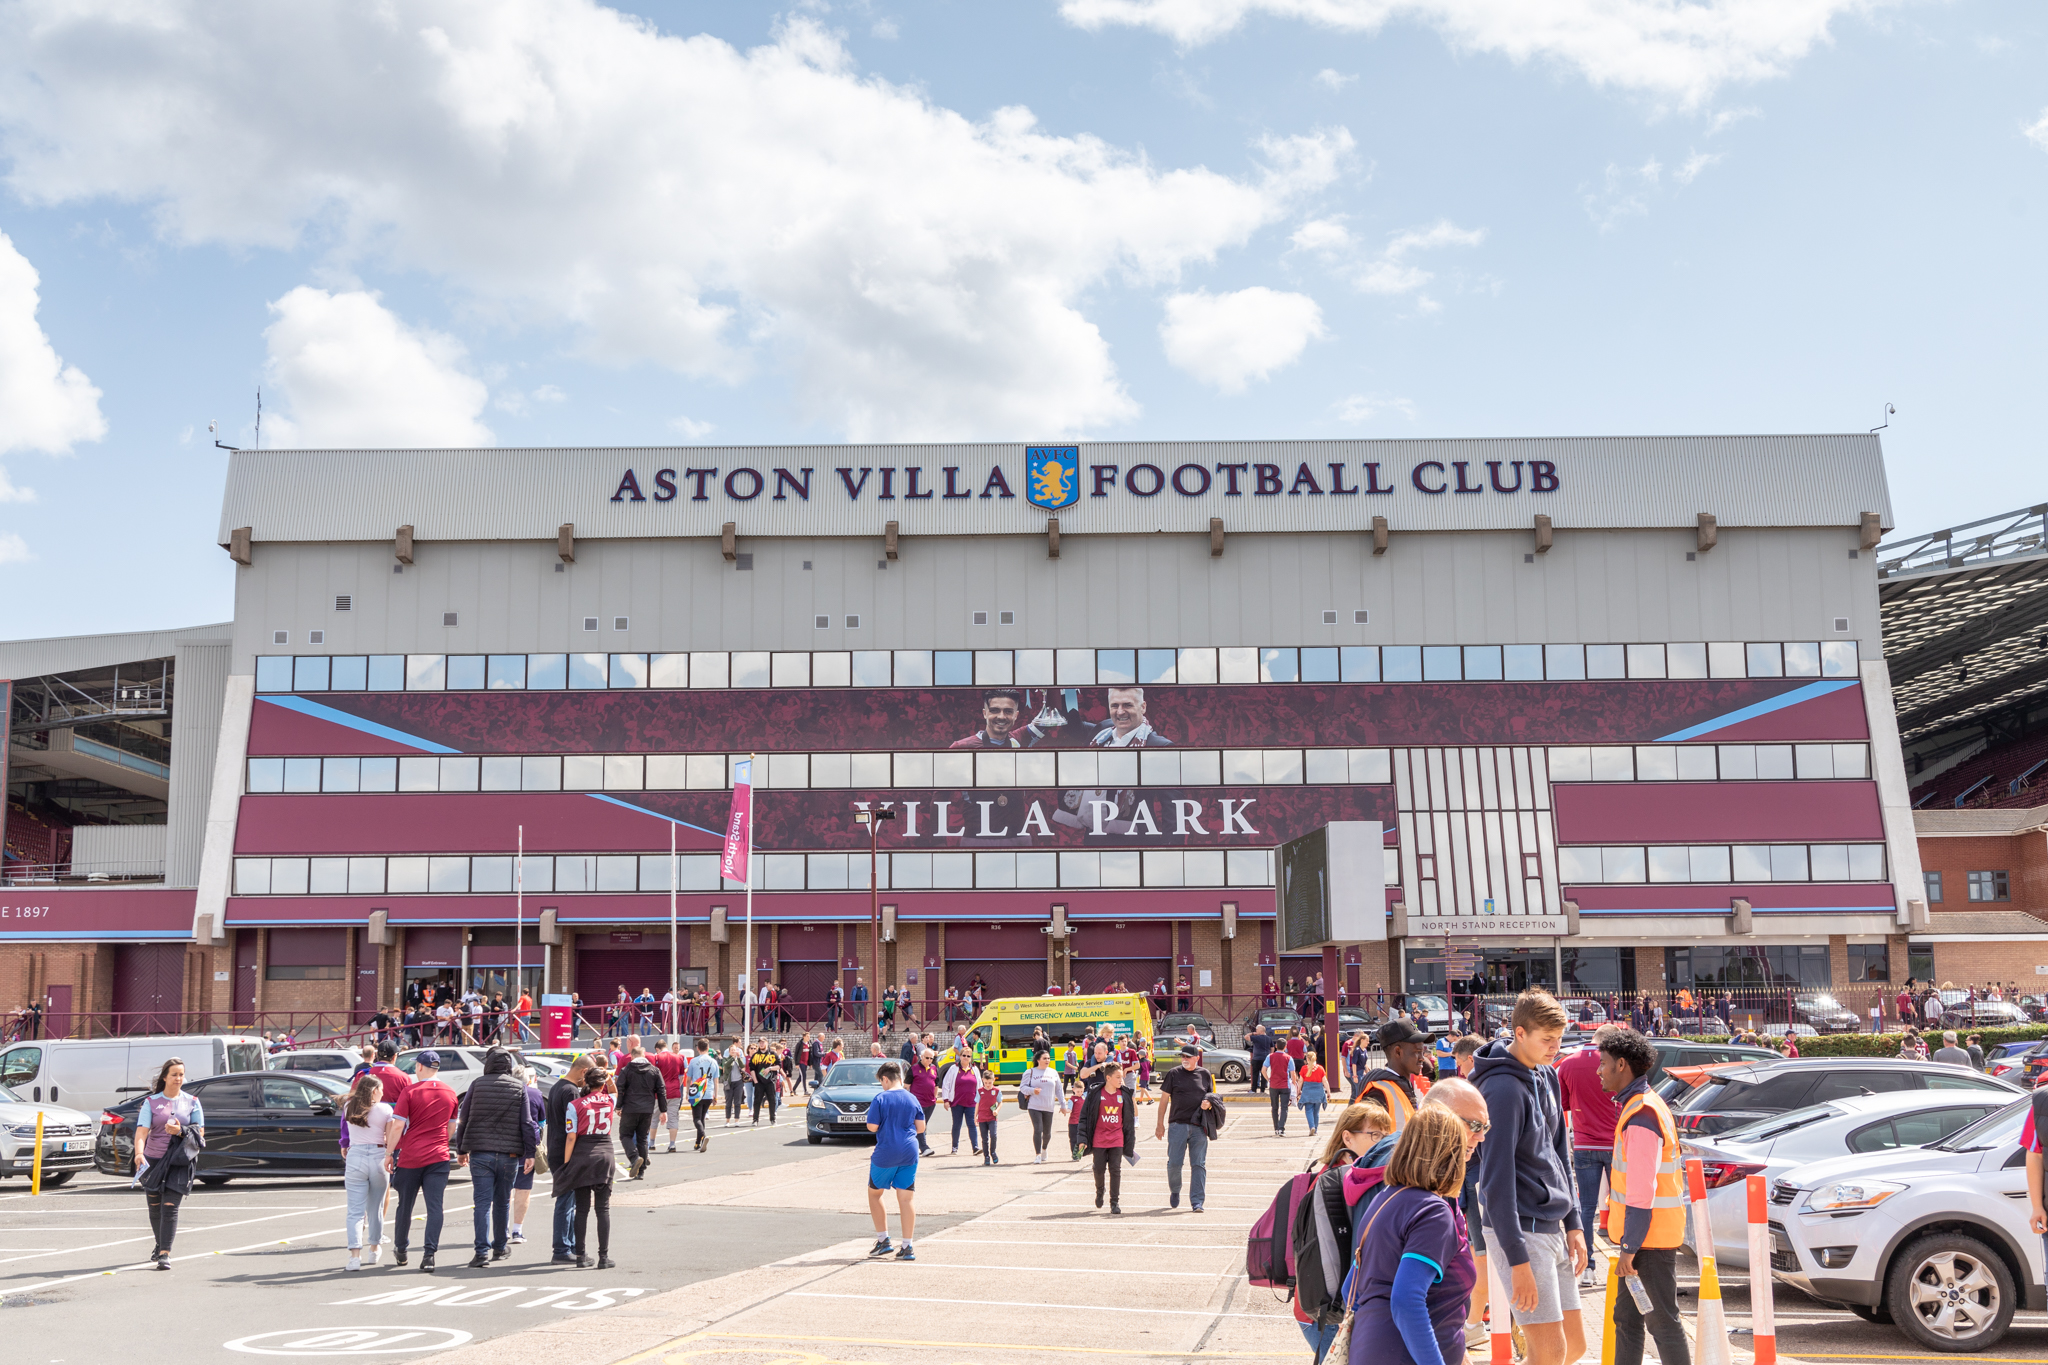 Aston Villa Football Club, stadium branding